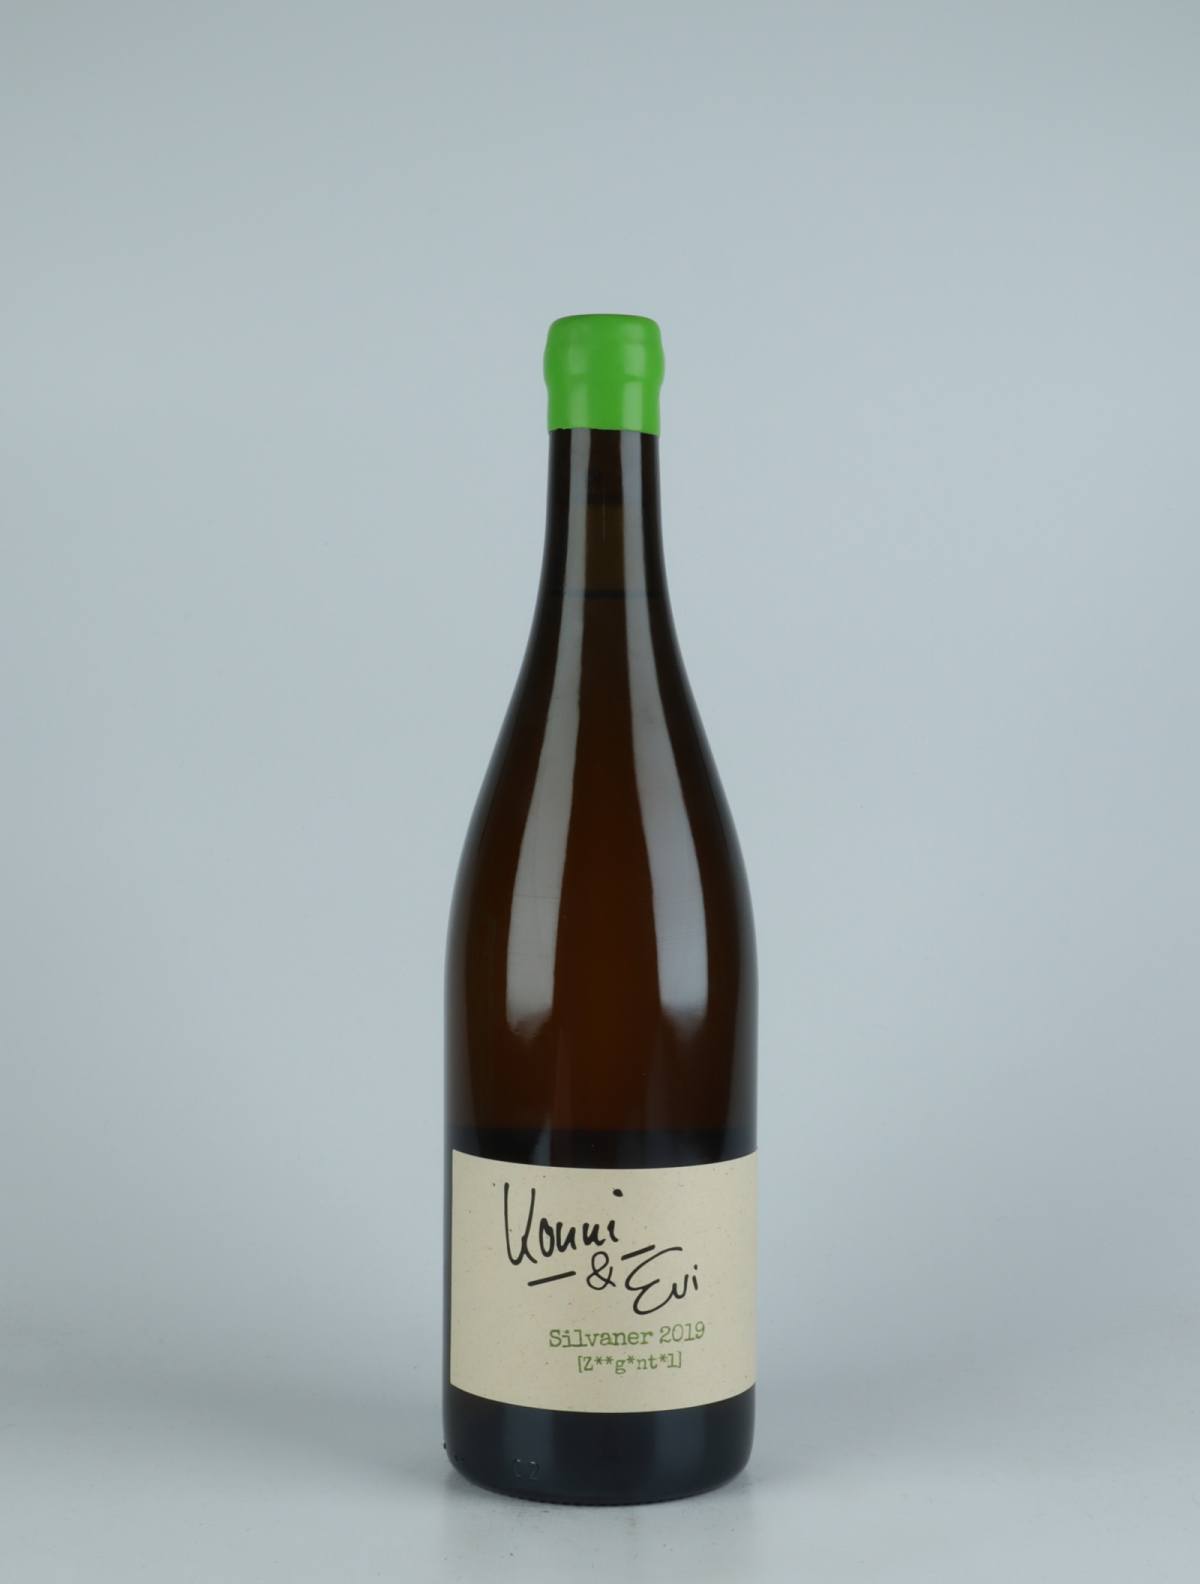 A bottle 2019 Silvaner Ziegental White wine from Konni & Evi, Saale-Unstrut in Germany